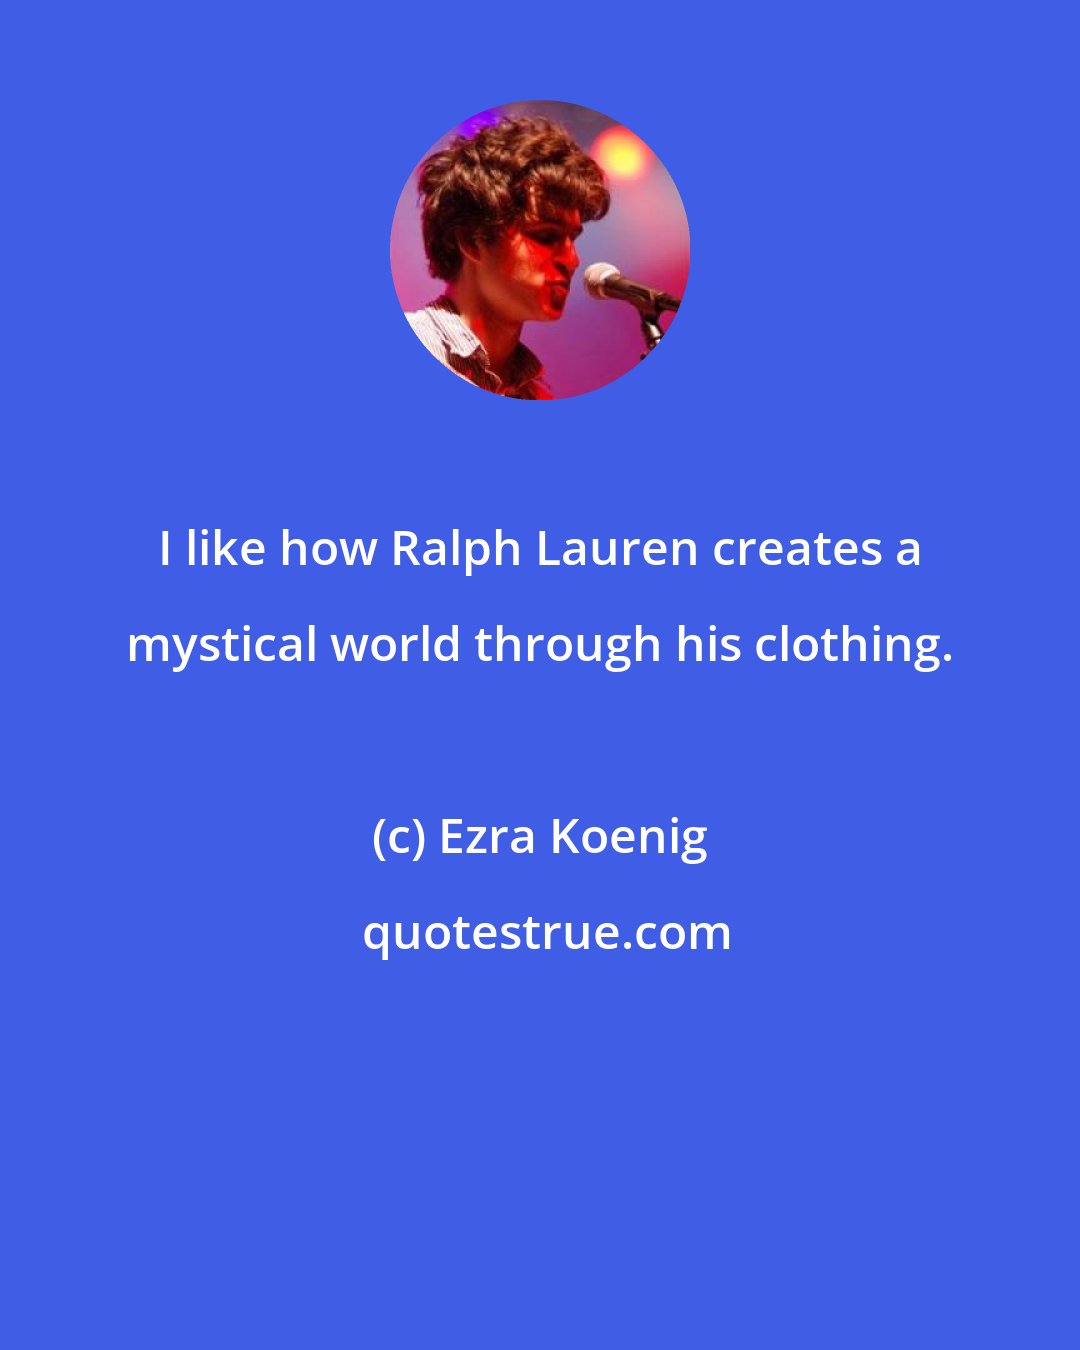 Ezra Koenig: I like how Ralph Lauren creates a mystical world through his clothing.